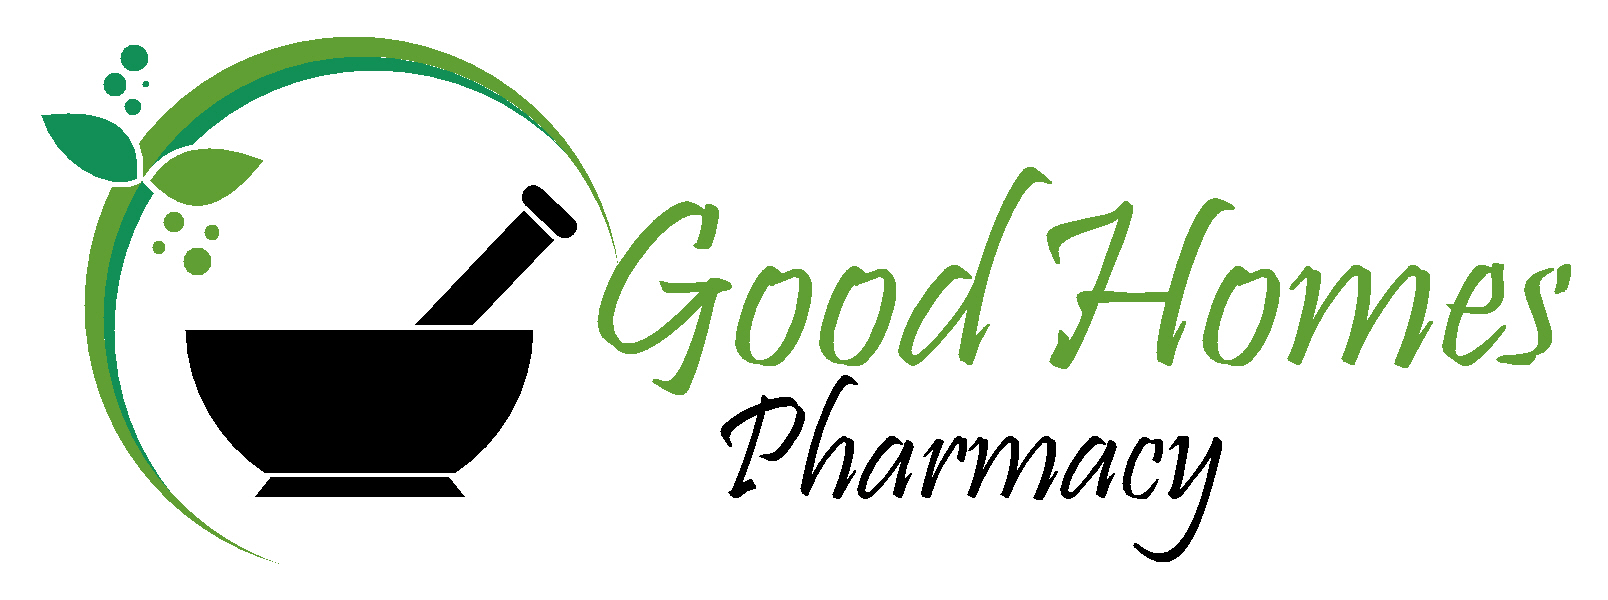 Good Homes Pharmacy